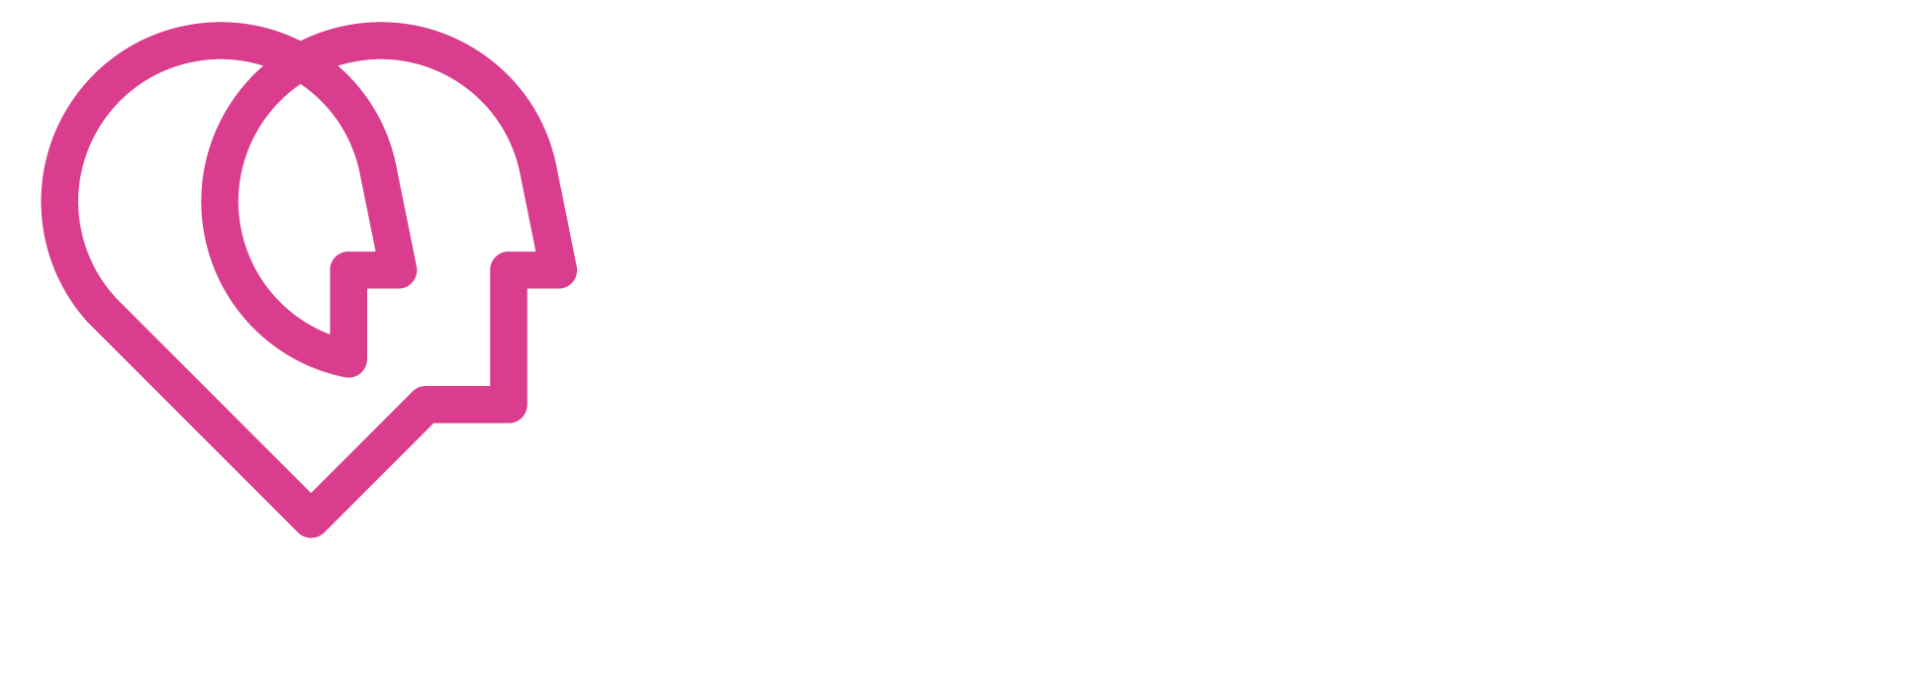 Parenting Mental Health Logo